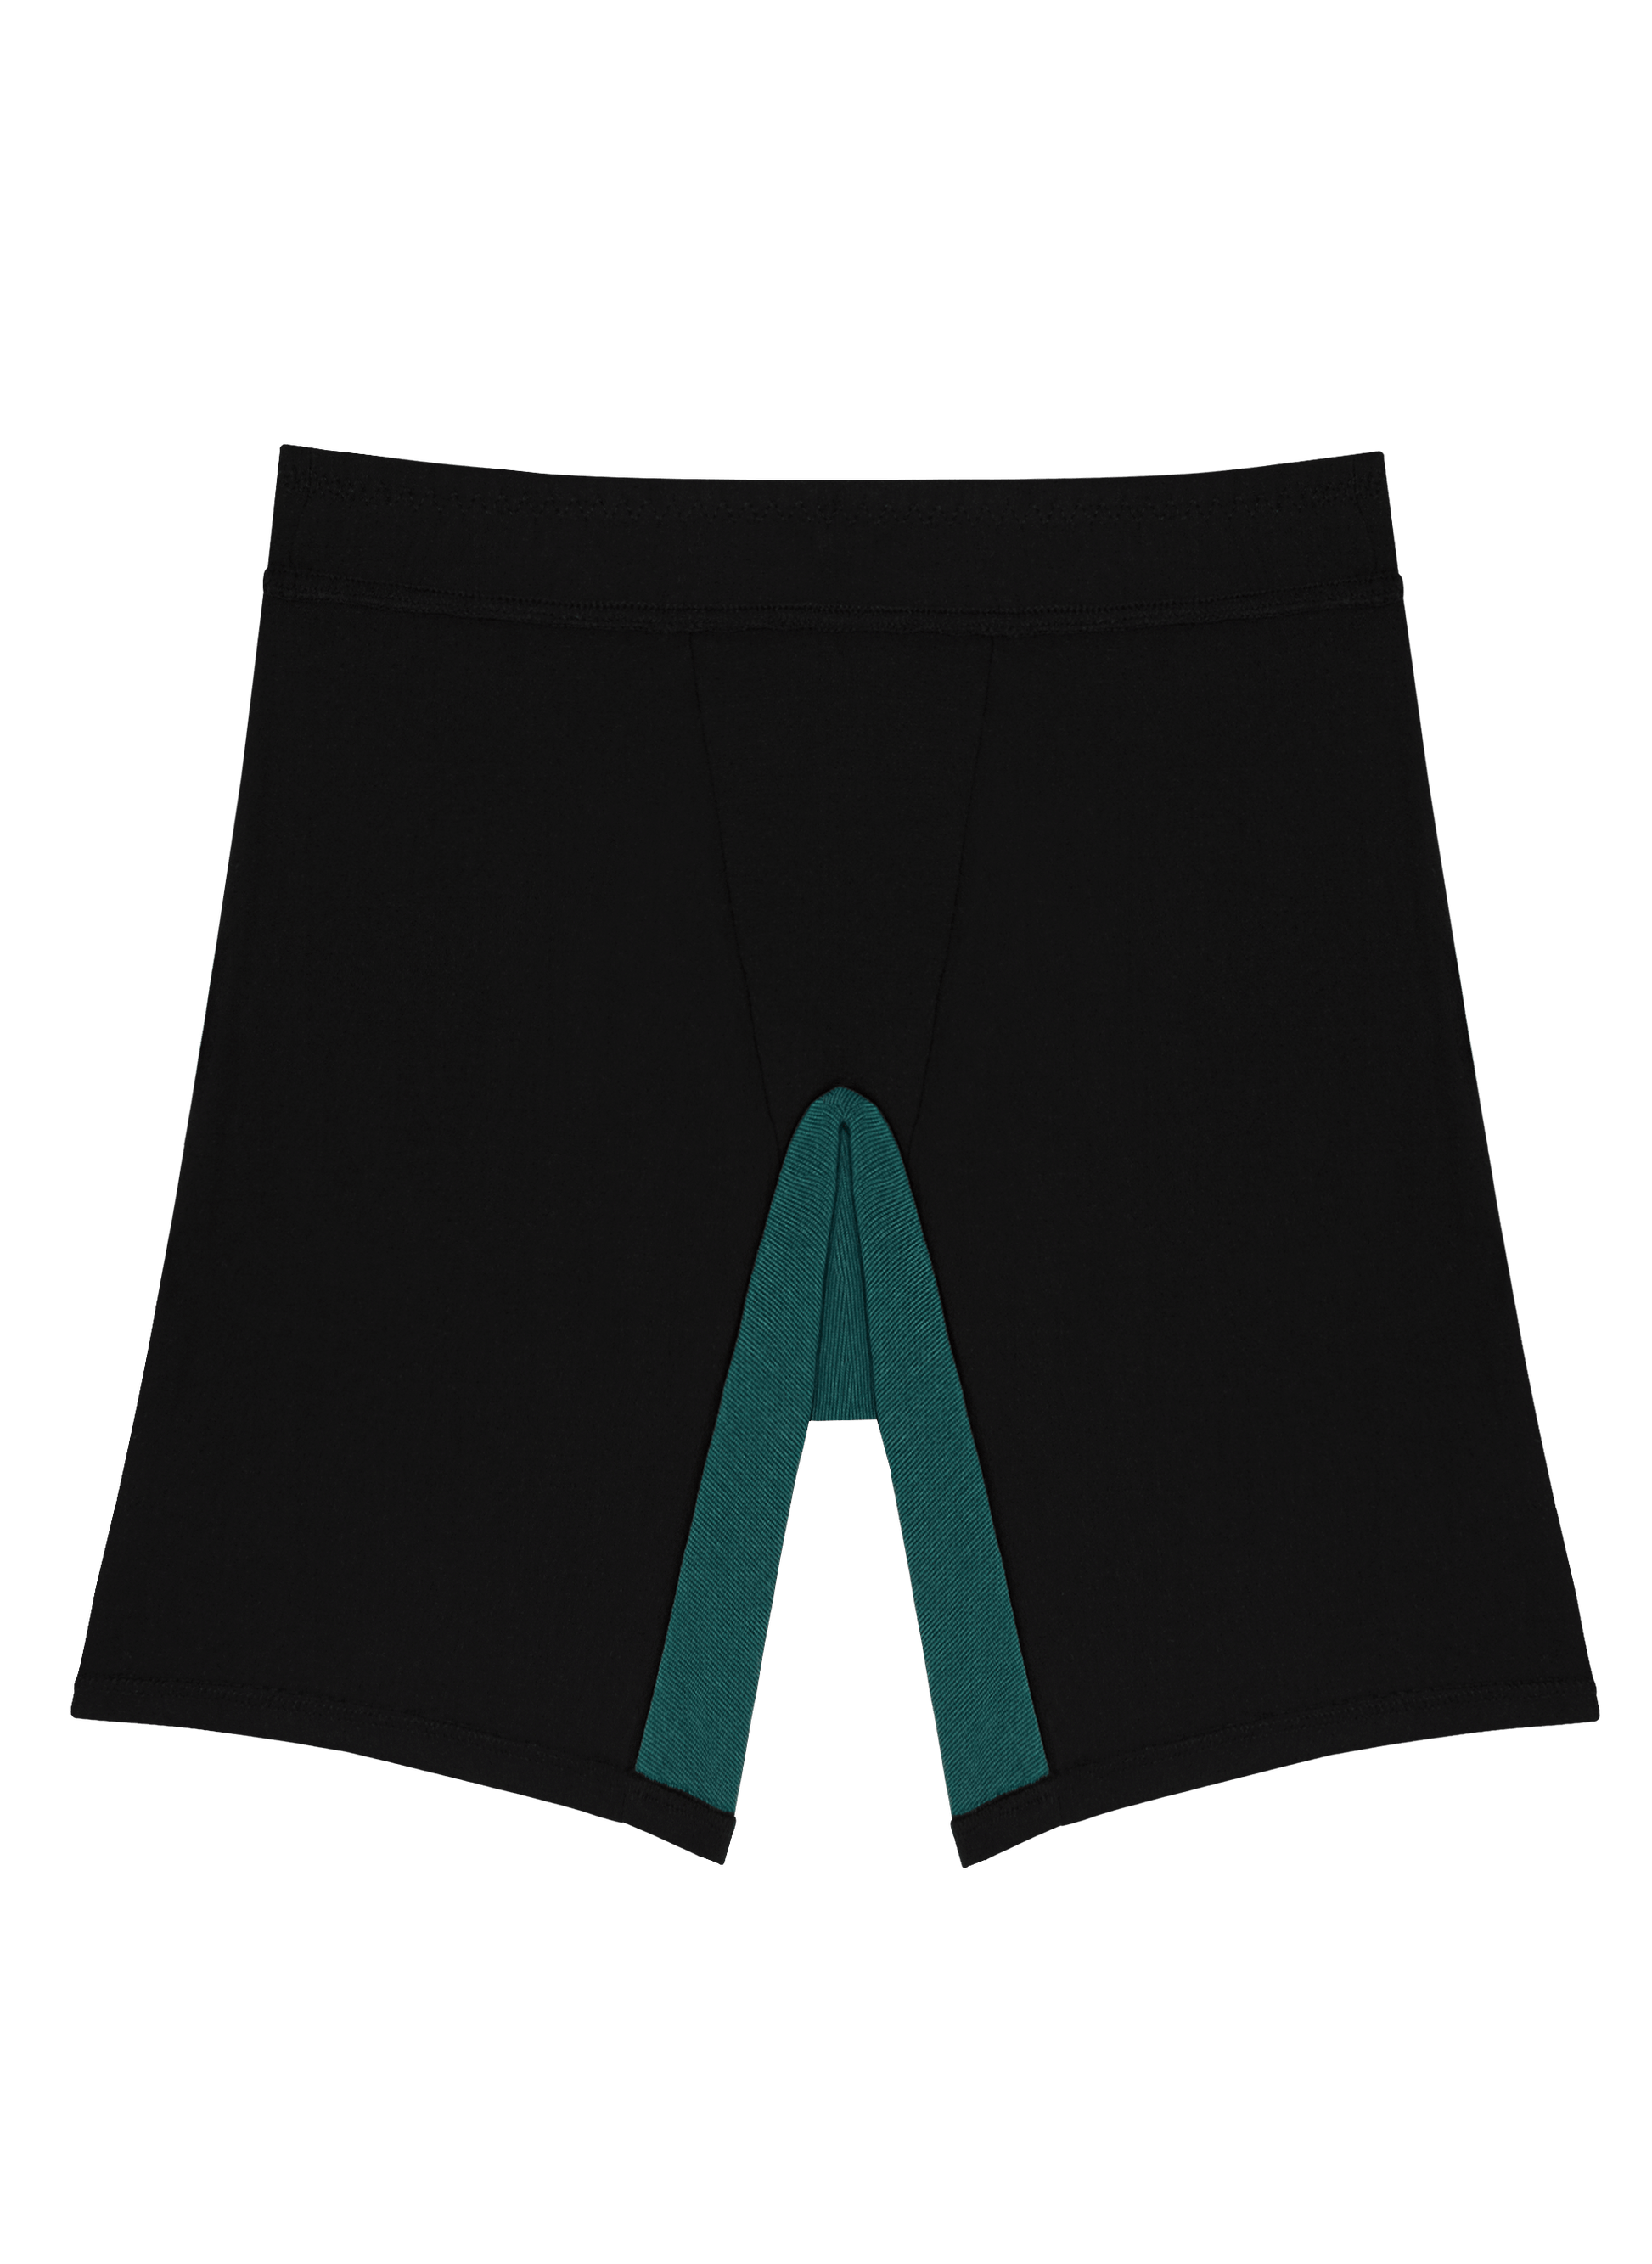 MED - Match your underwear  💖 Shop now